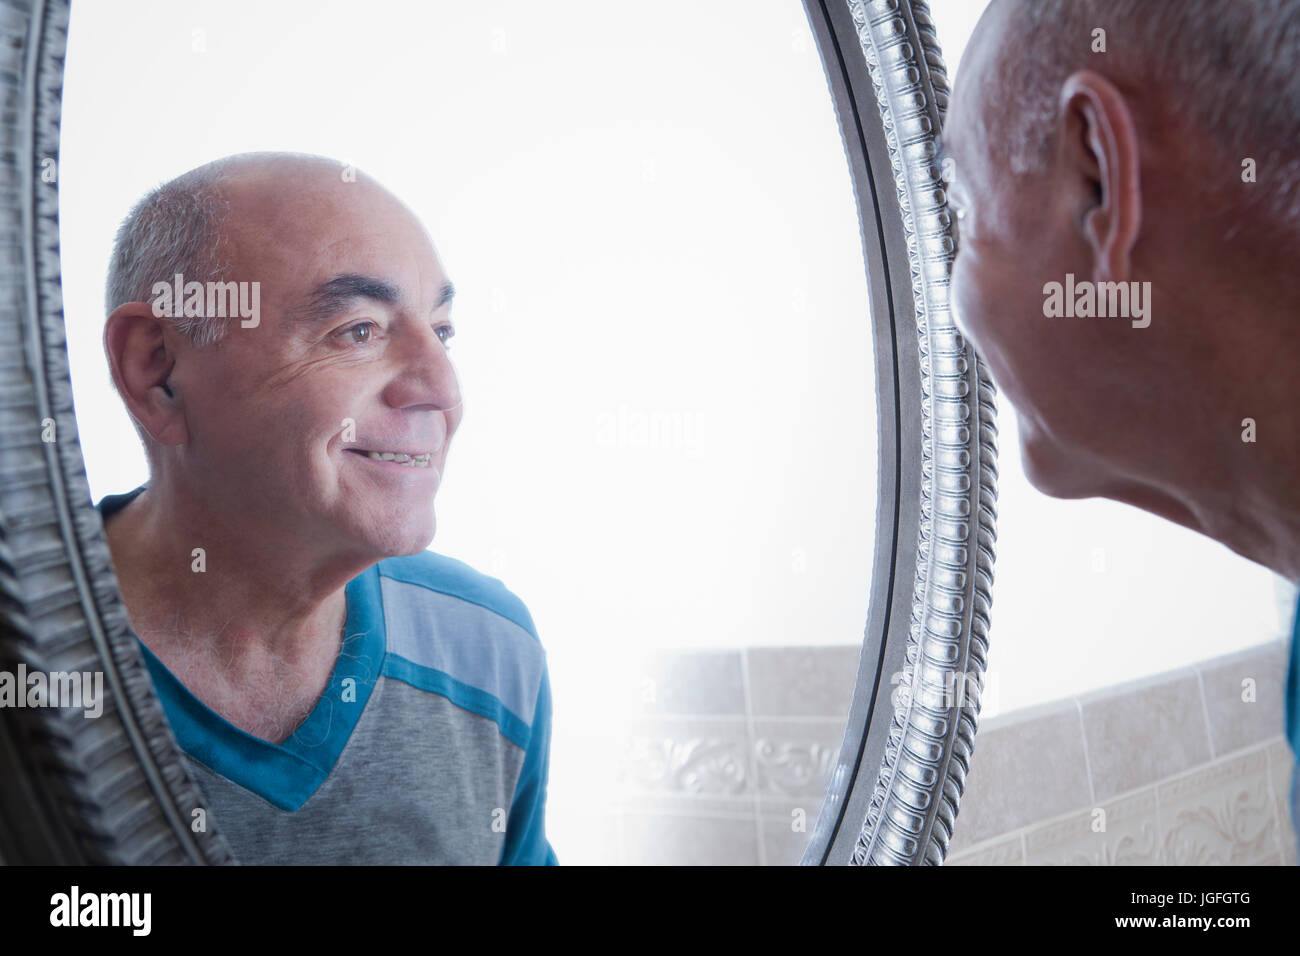 Reflection of smiling Hispanic man in bathroom mirror Stock Photo